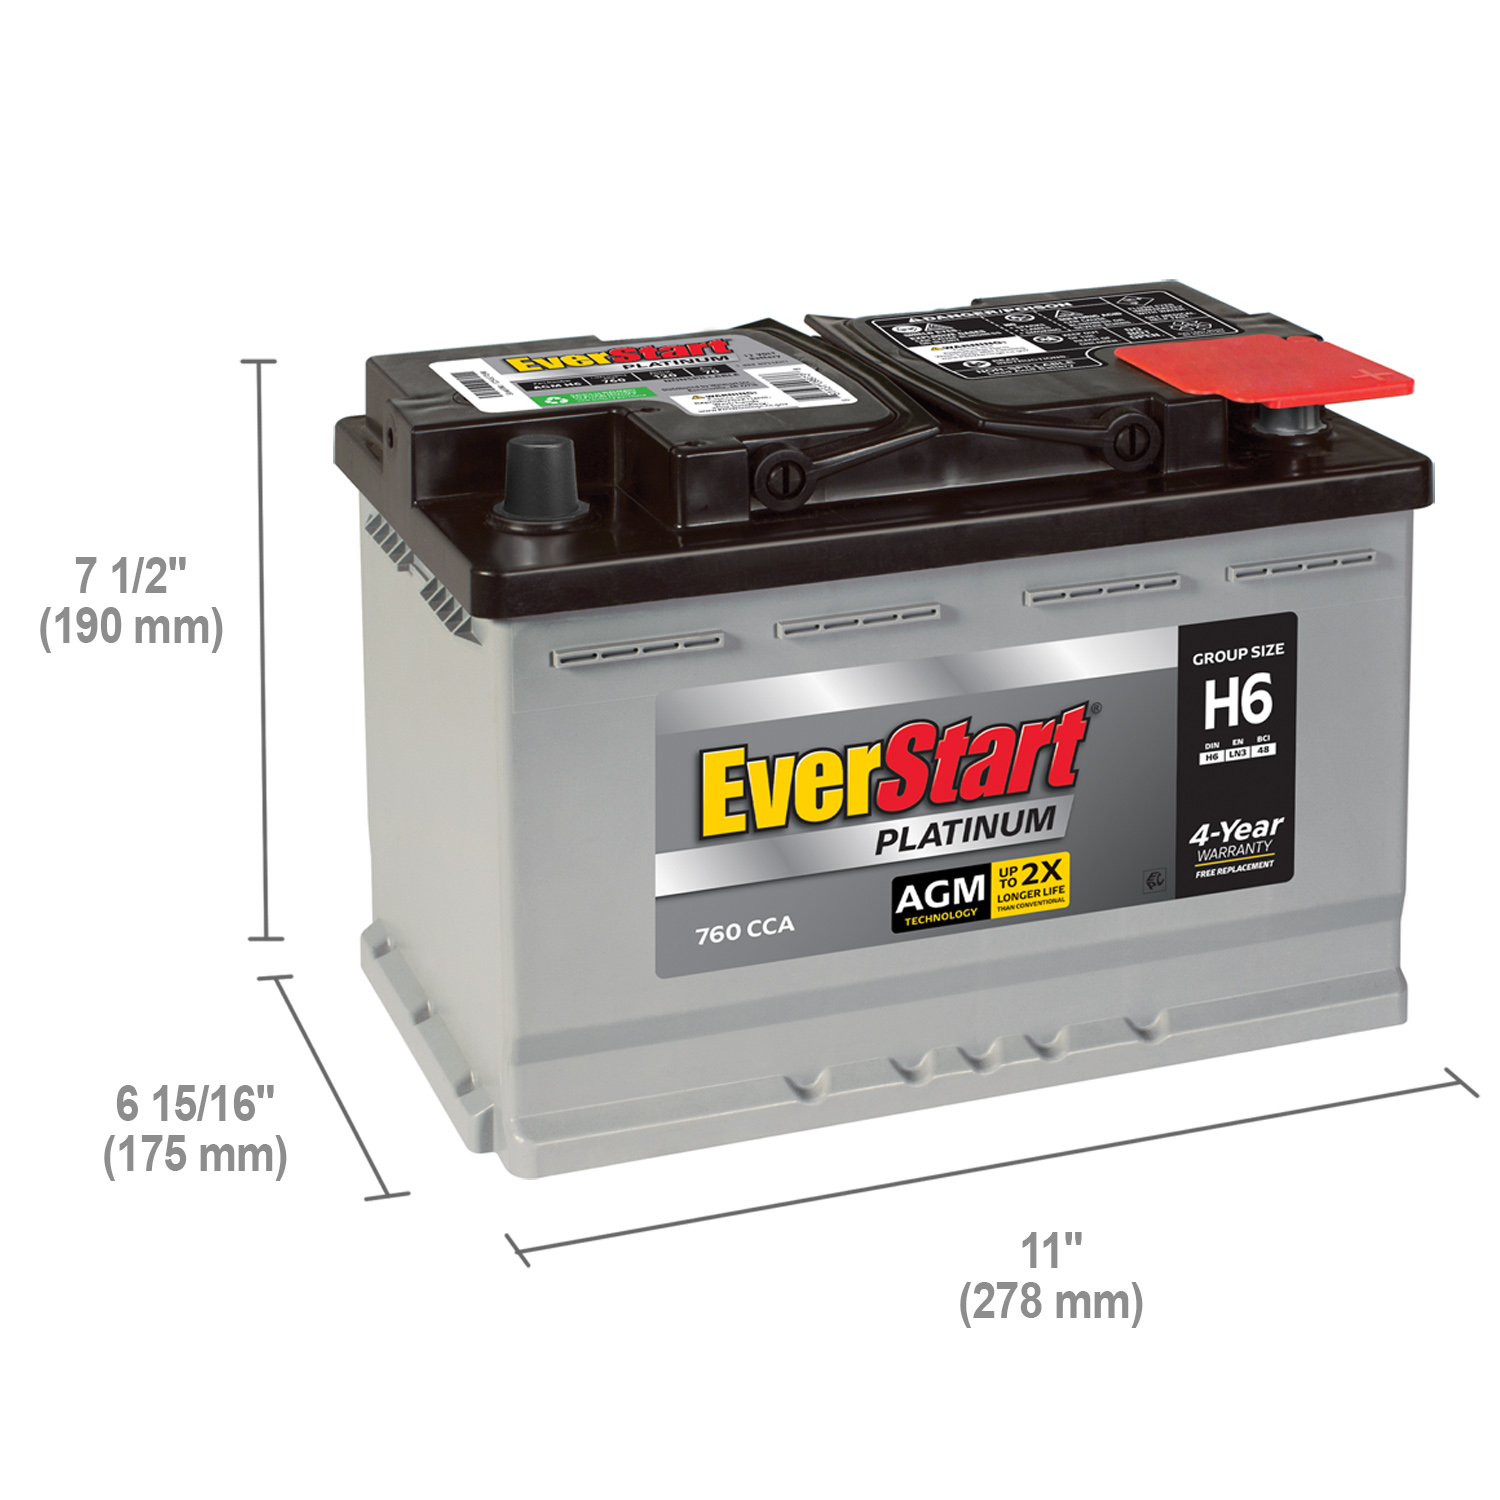 EverStart Platinum AGM Automotive Battery, Group H6 / LN3 / 48 12 Volt, 760 CCA - image 2 of 7